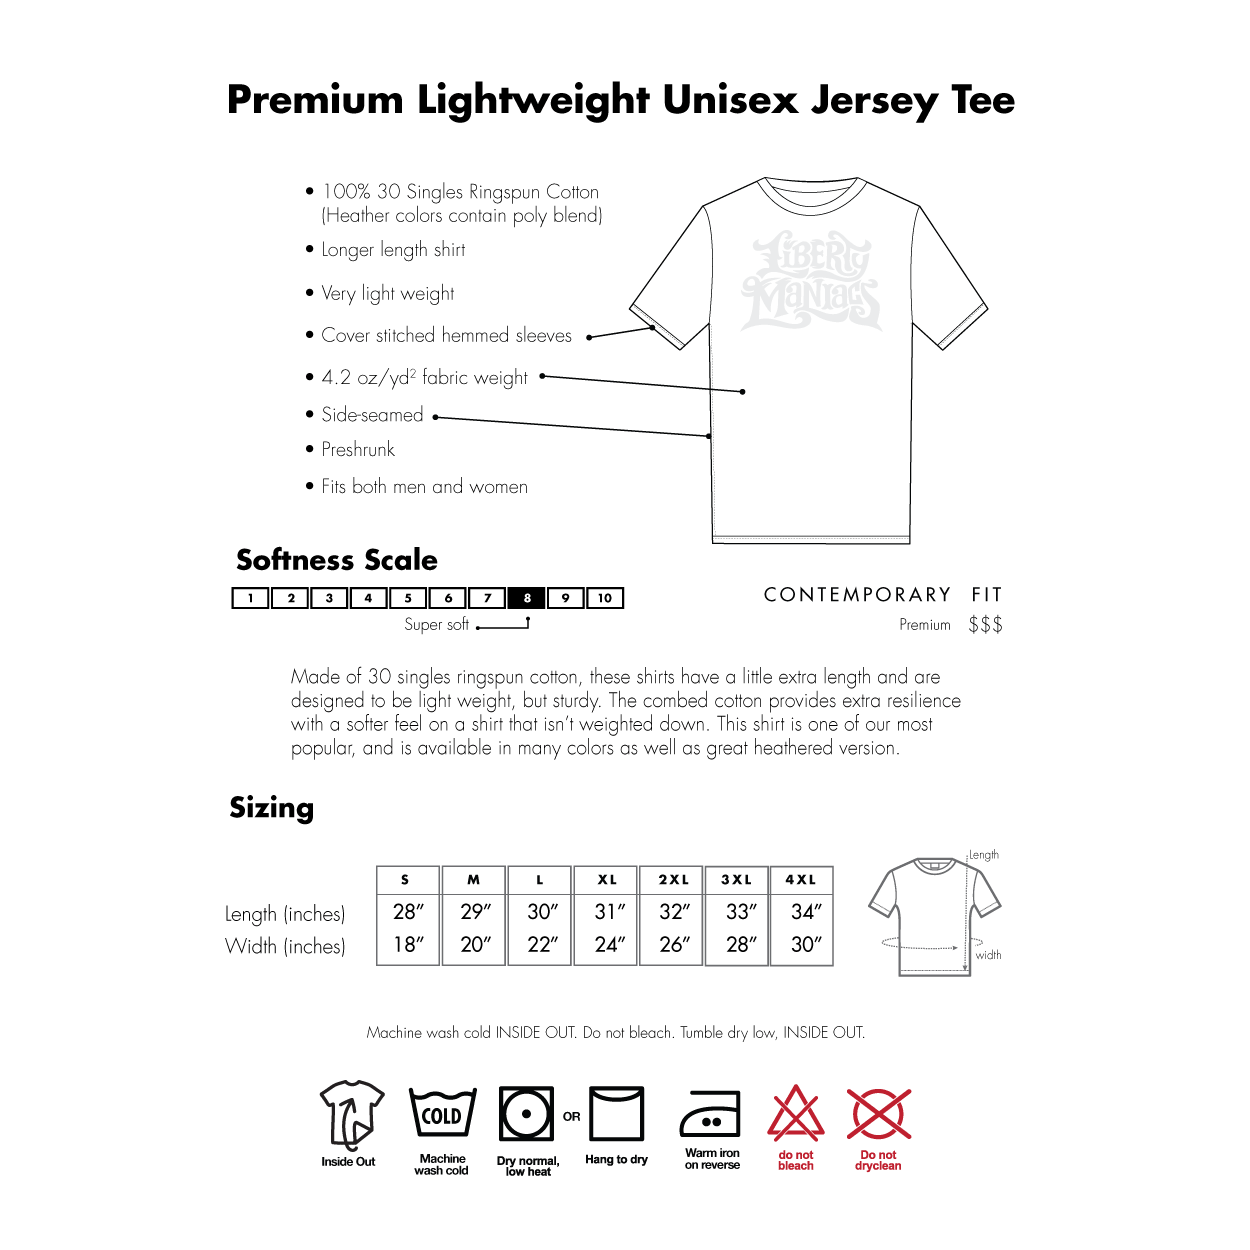 Newton’s Principia Short-Sleeve Unisex T-Shirt